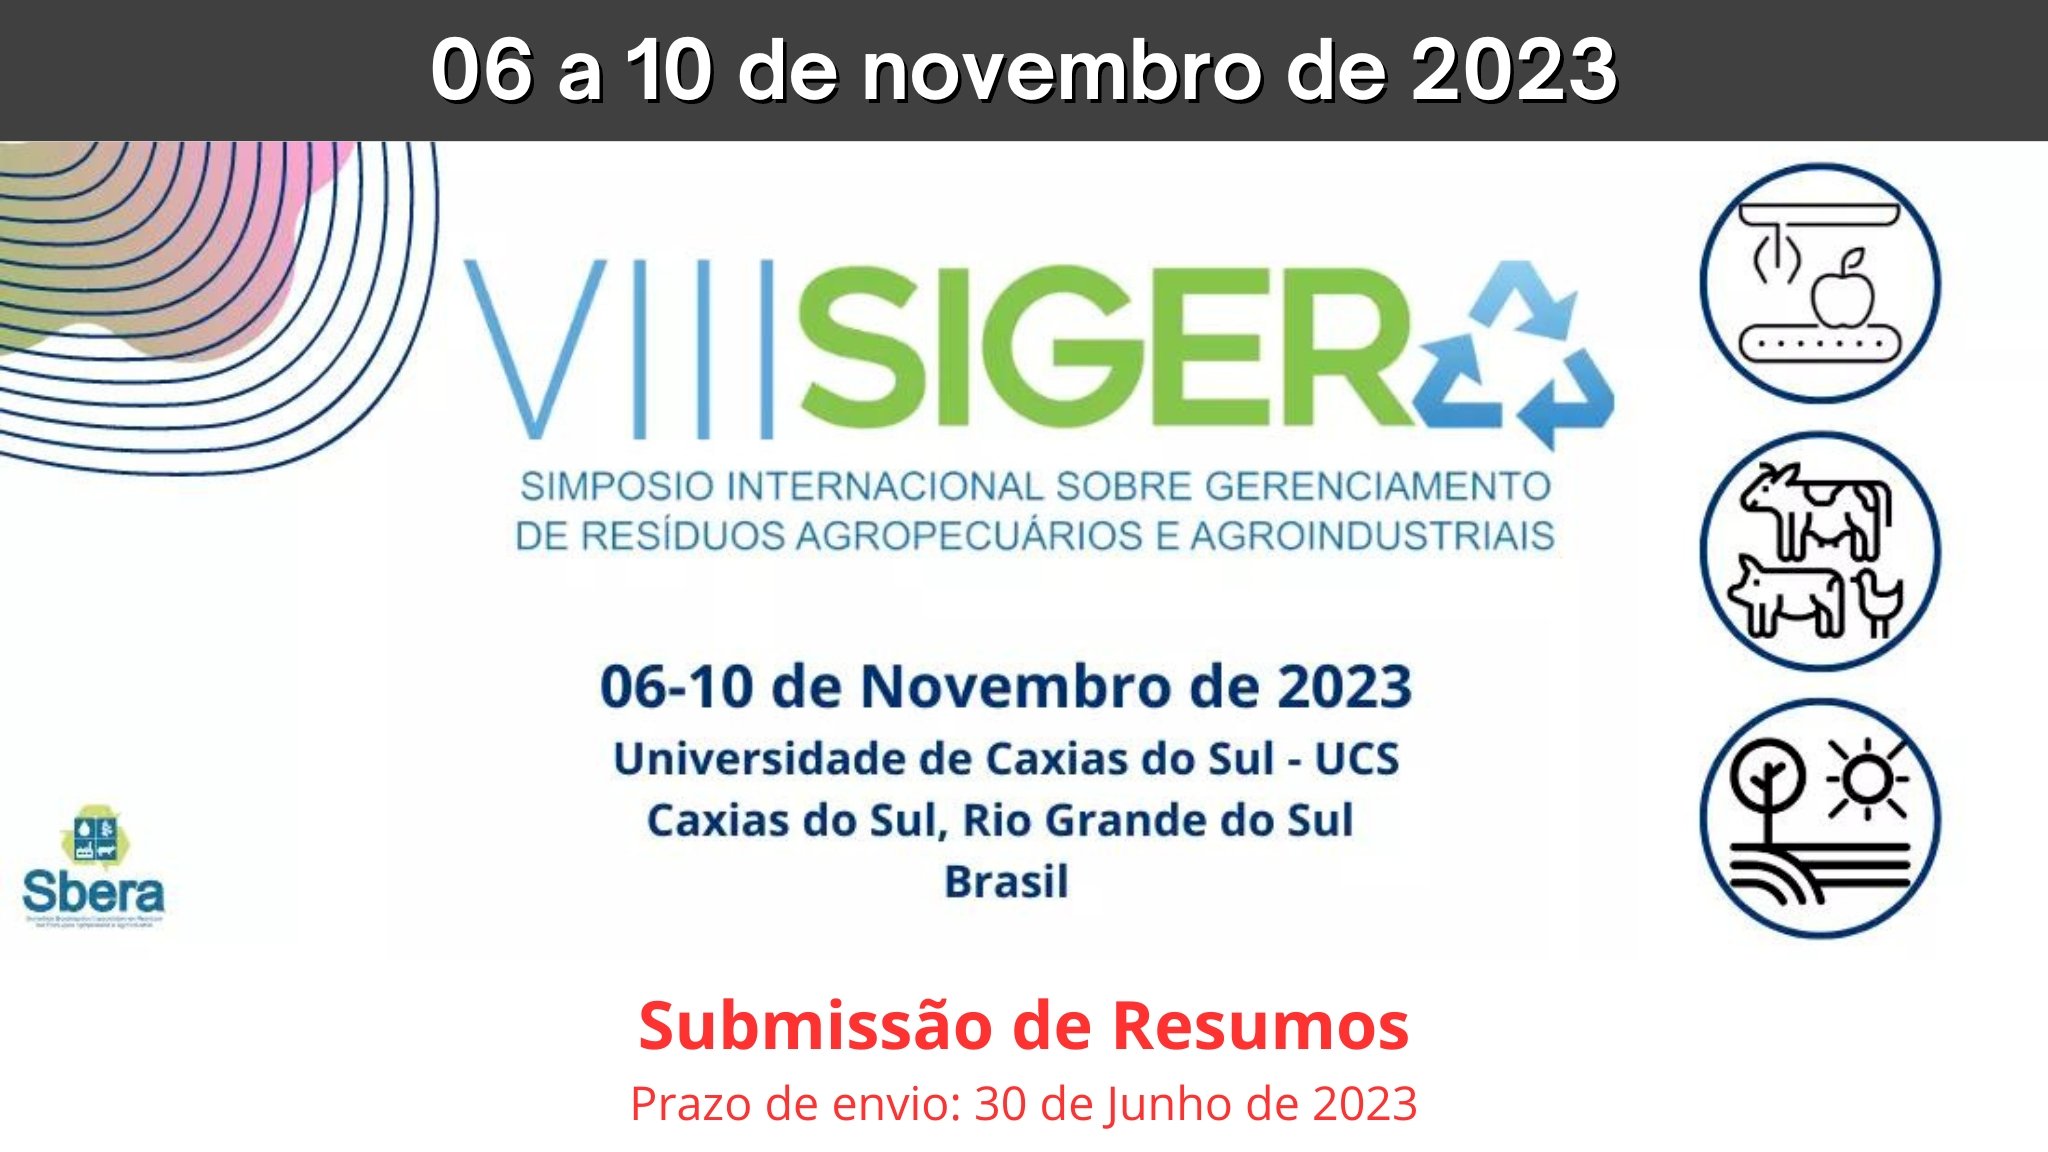 VIII Sigera - Simpósio Internacional sobre Gerenciamento de Resíduos Agropecuários e Agroindustriais